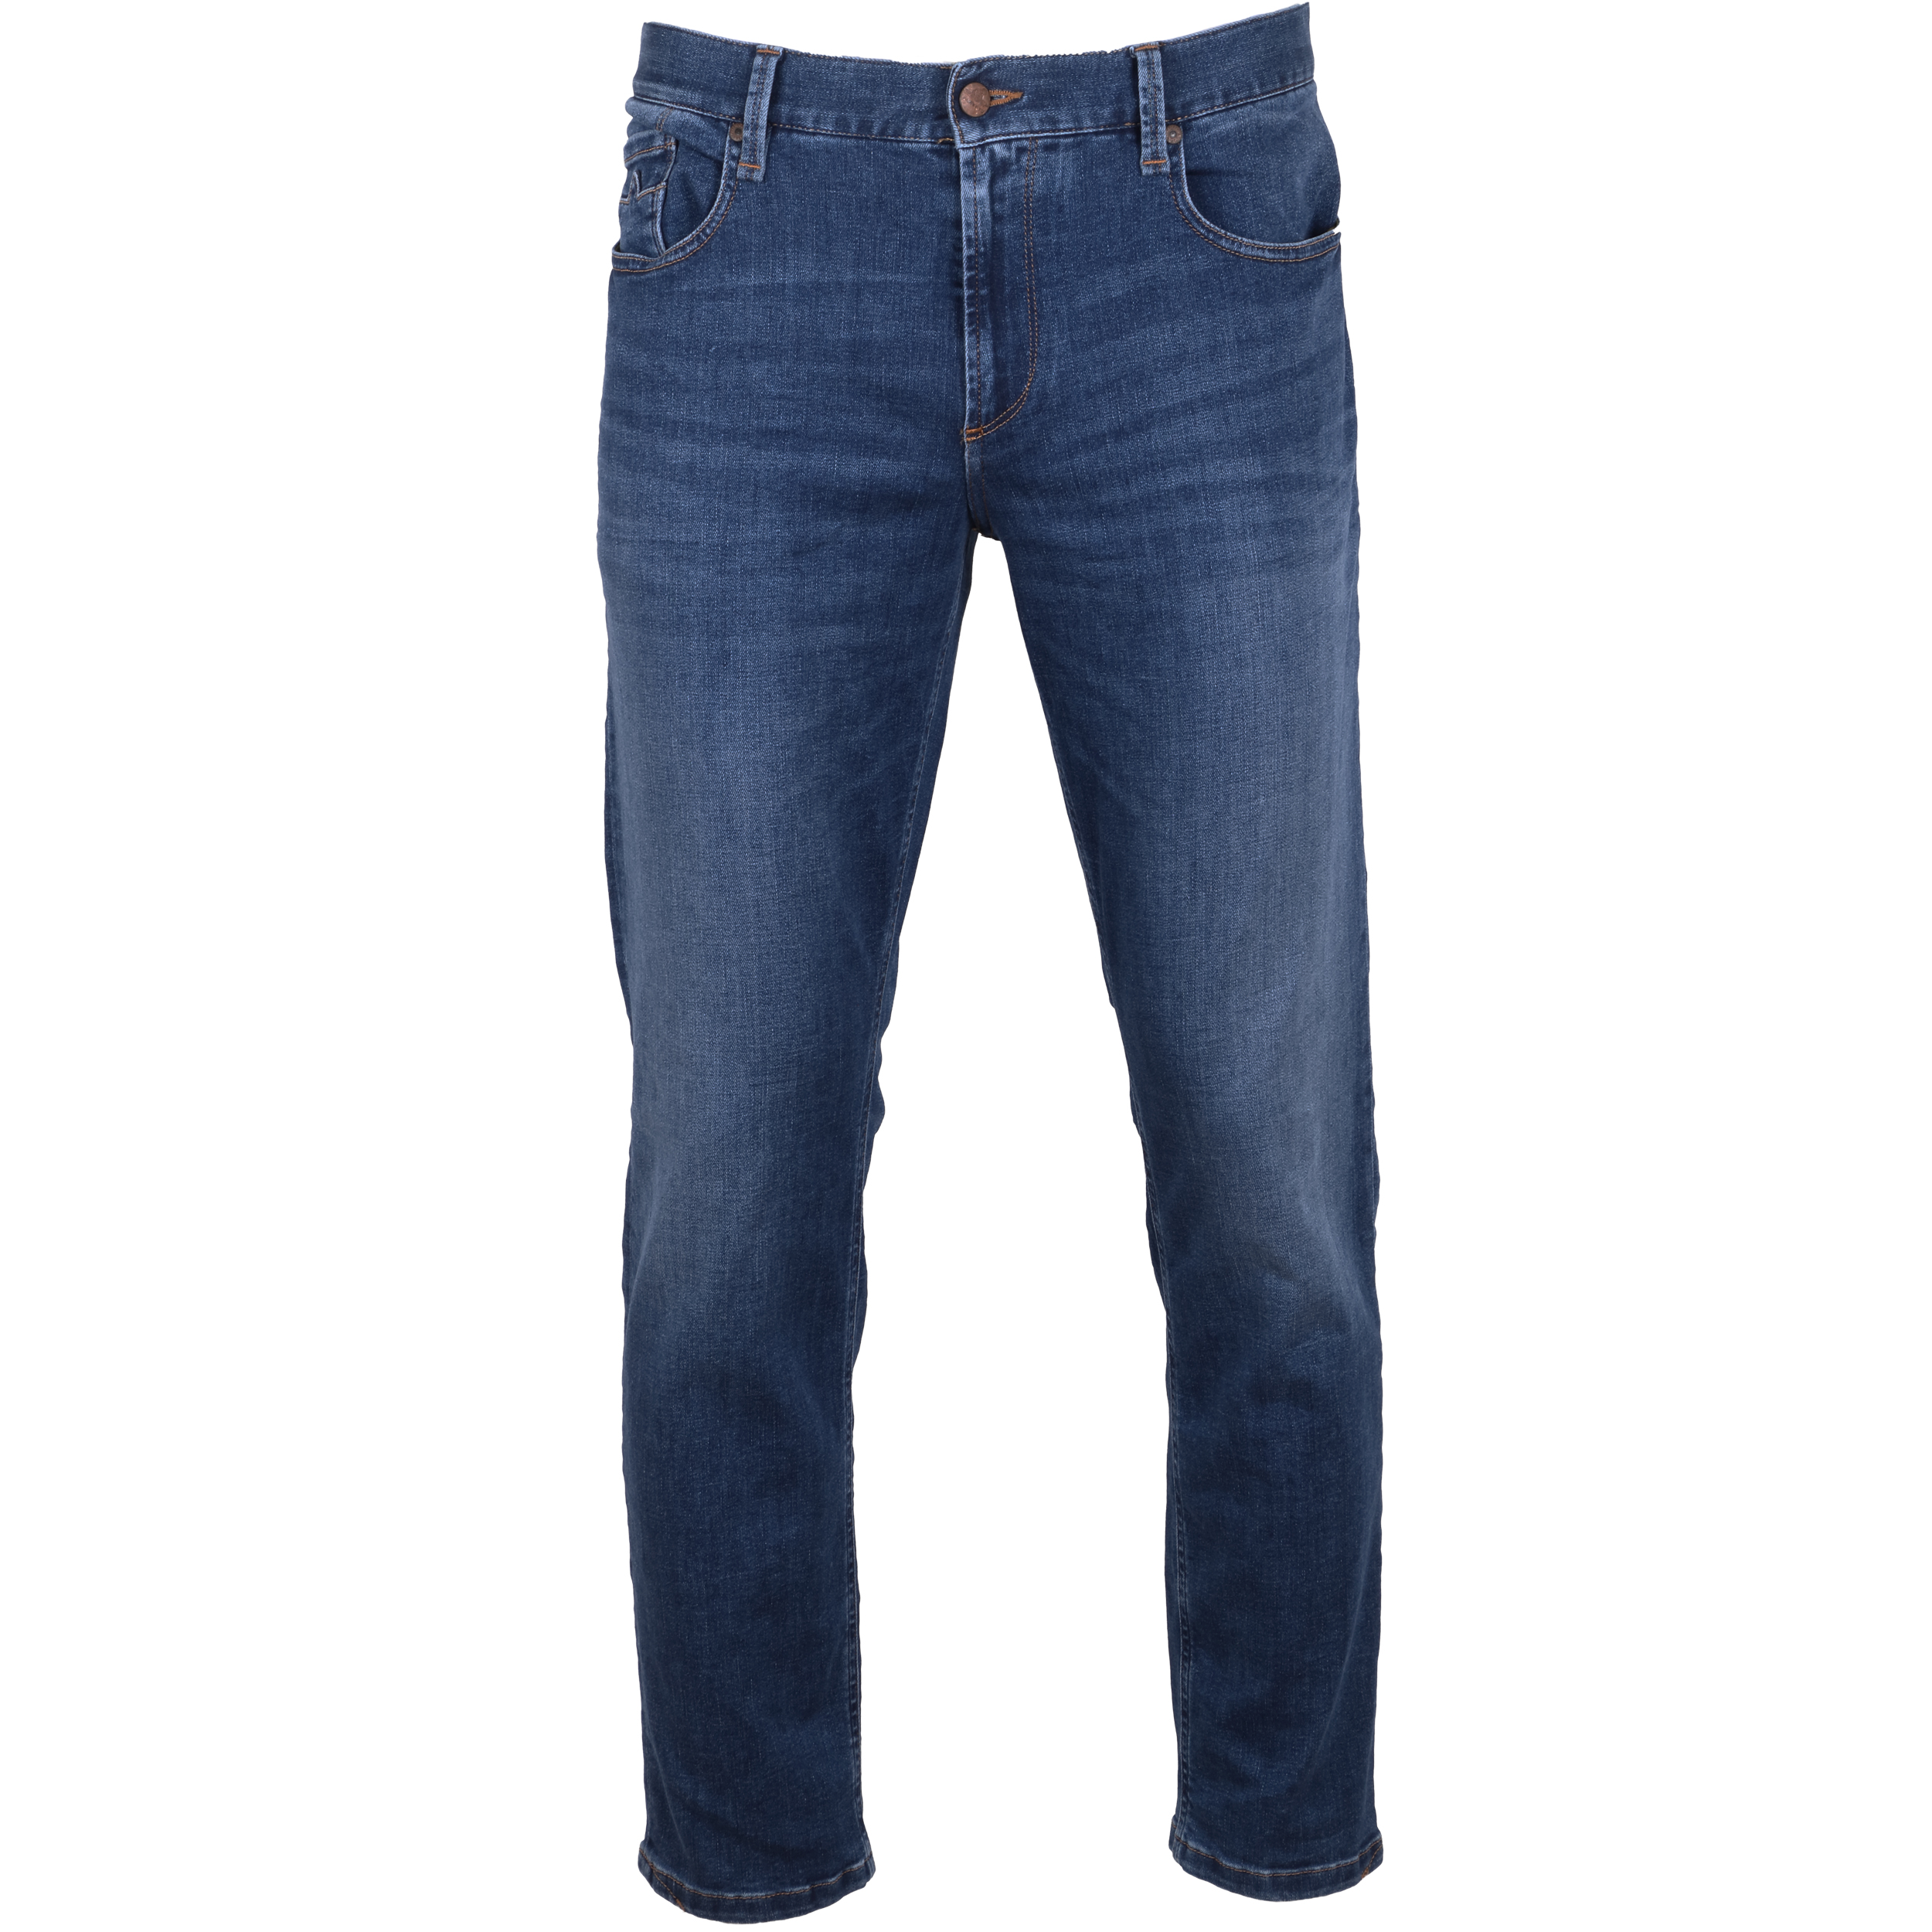 Alberto Herren Jeans Slipe tapered fit - blau 34/34